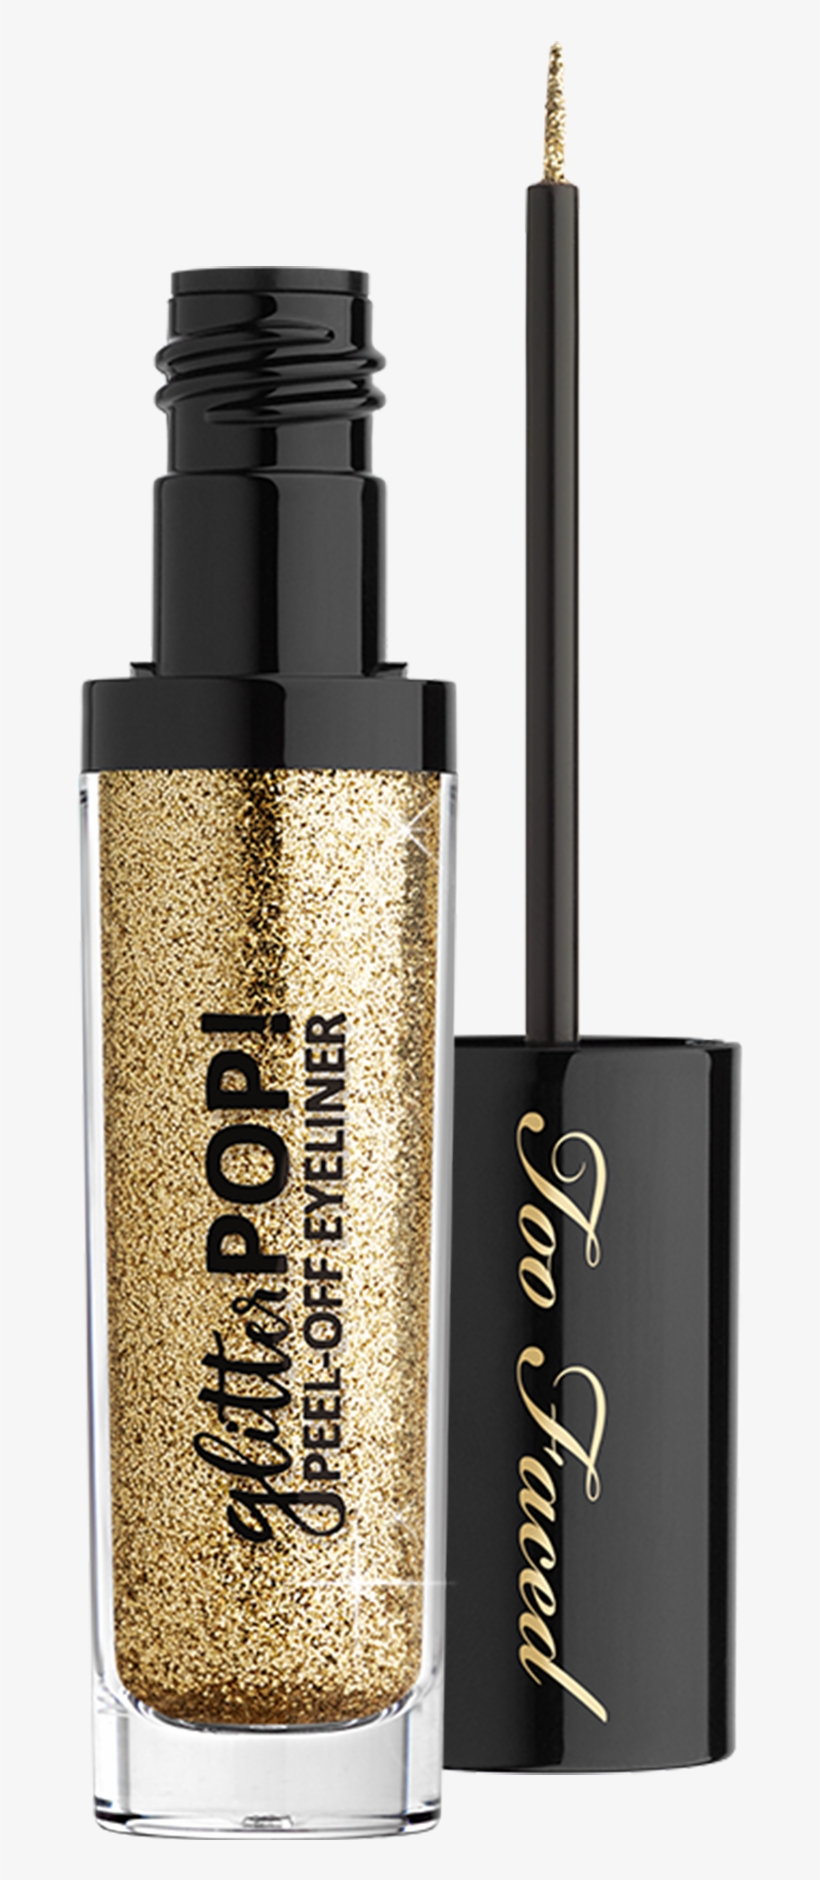 Glitter - Too Faced Glitter Pop! Peel-off Eyeliner, transparent png #444448